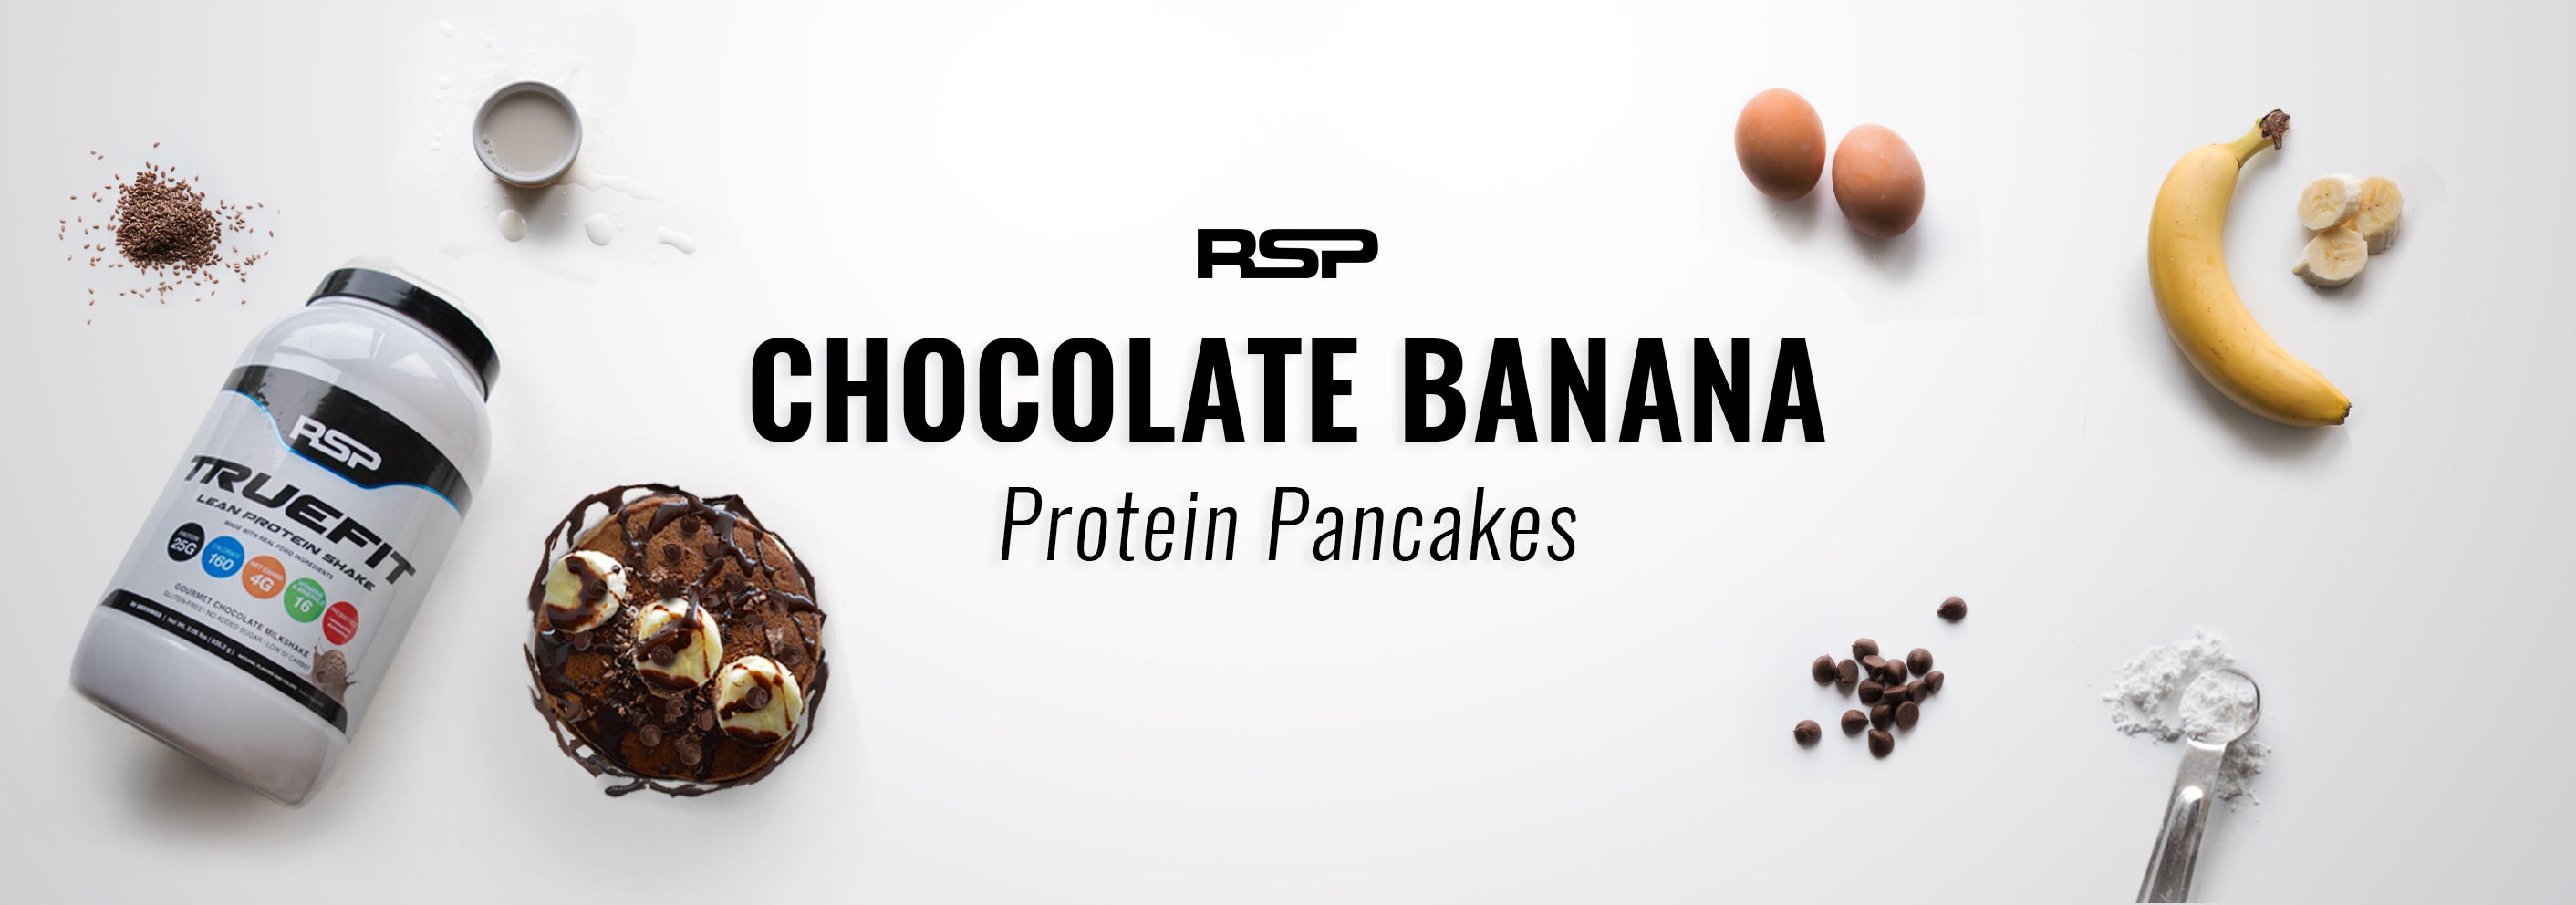 TrueFit chocolate protein powder chocolate banana protein pancakes